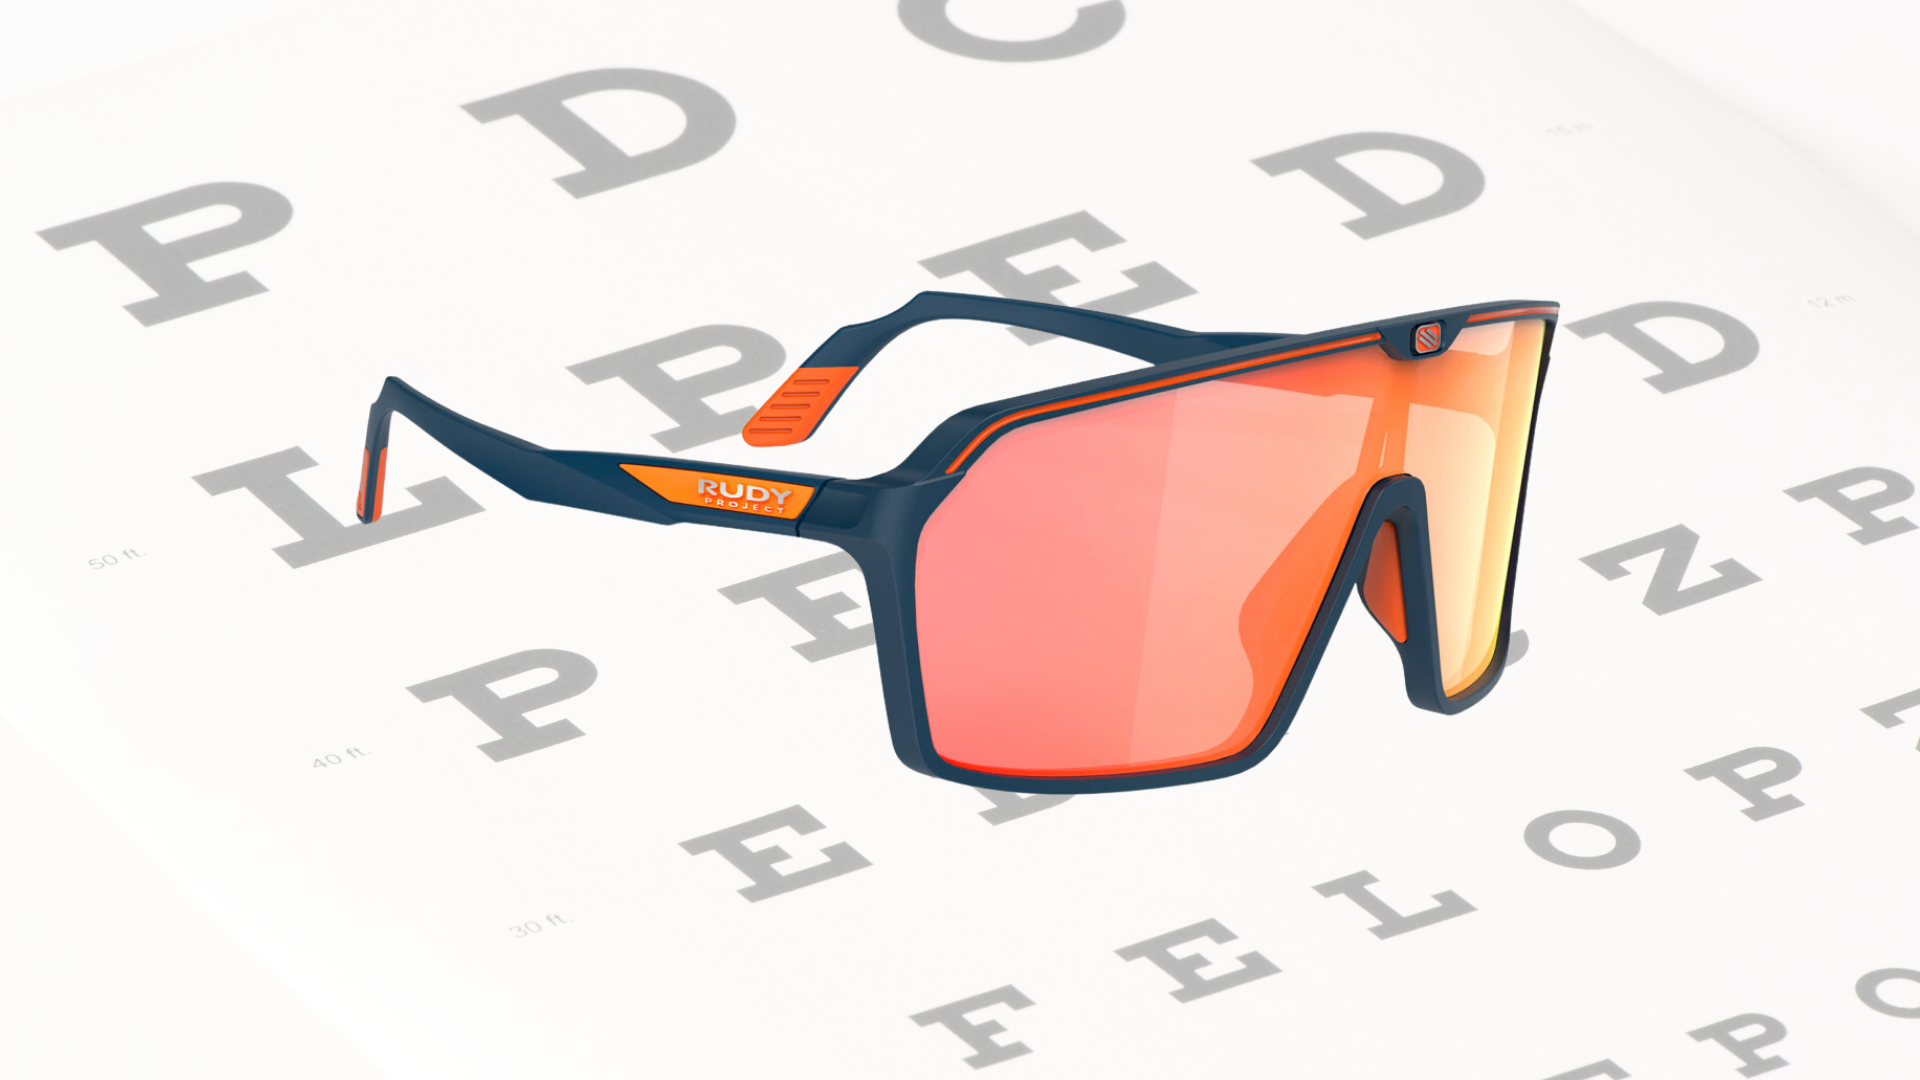 Formas de graduar las gafas deportivas - Óptica Savis, óptica deportiva